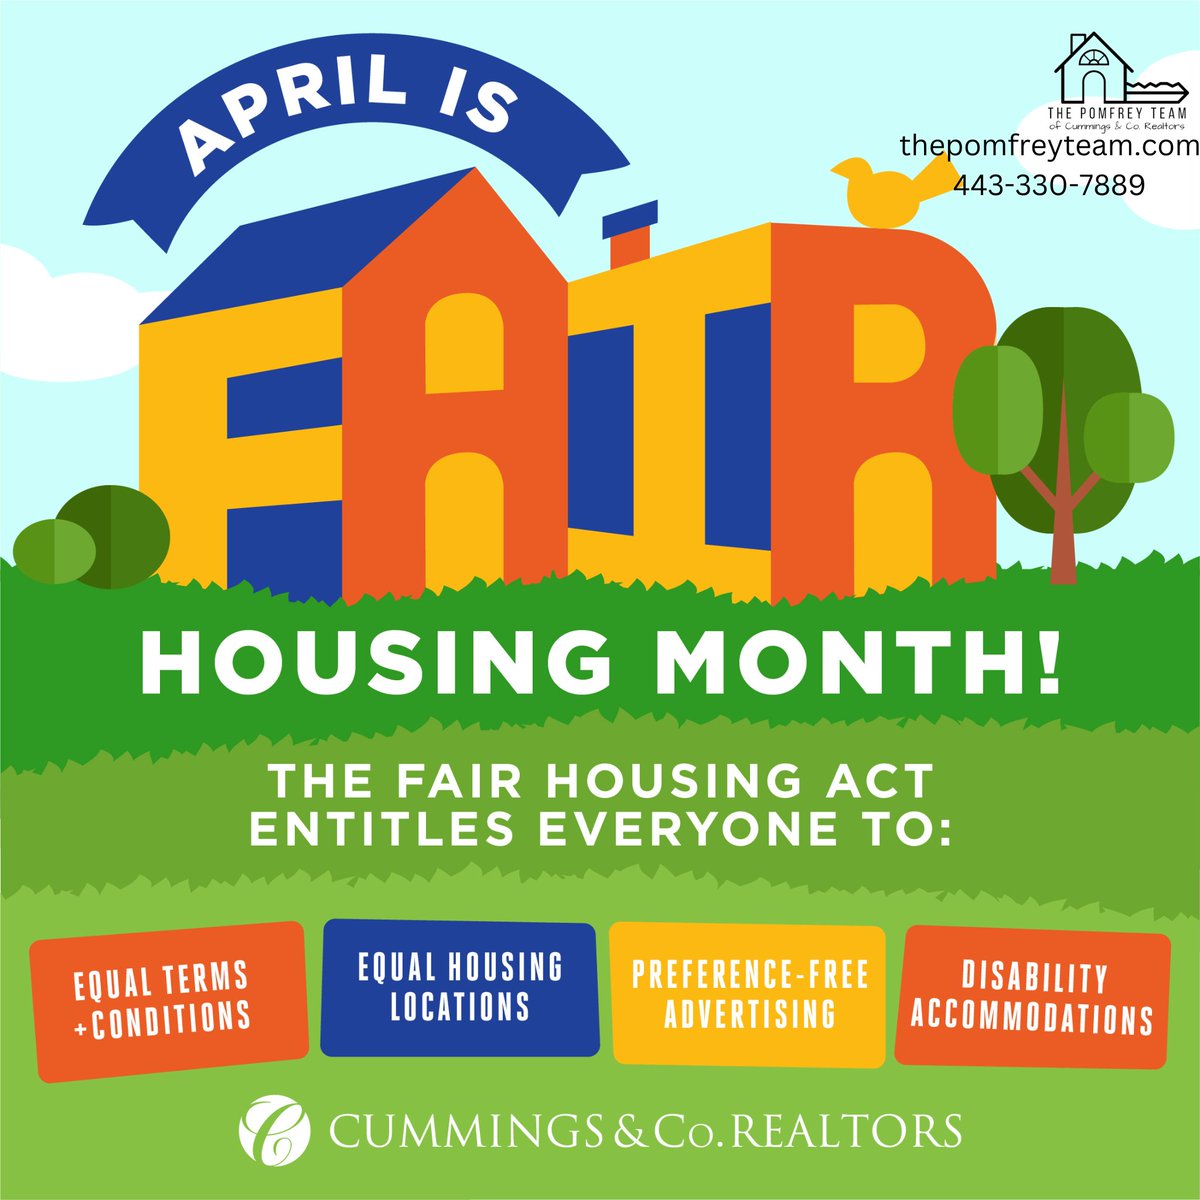 April is Fair Housing Month! #april #fairhousingmonth #fairhousing #thepomfreyteam